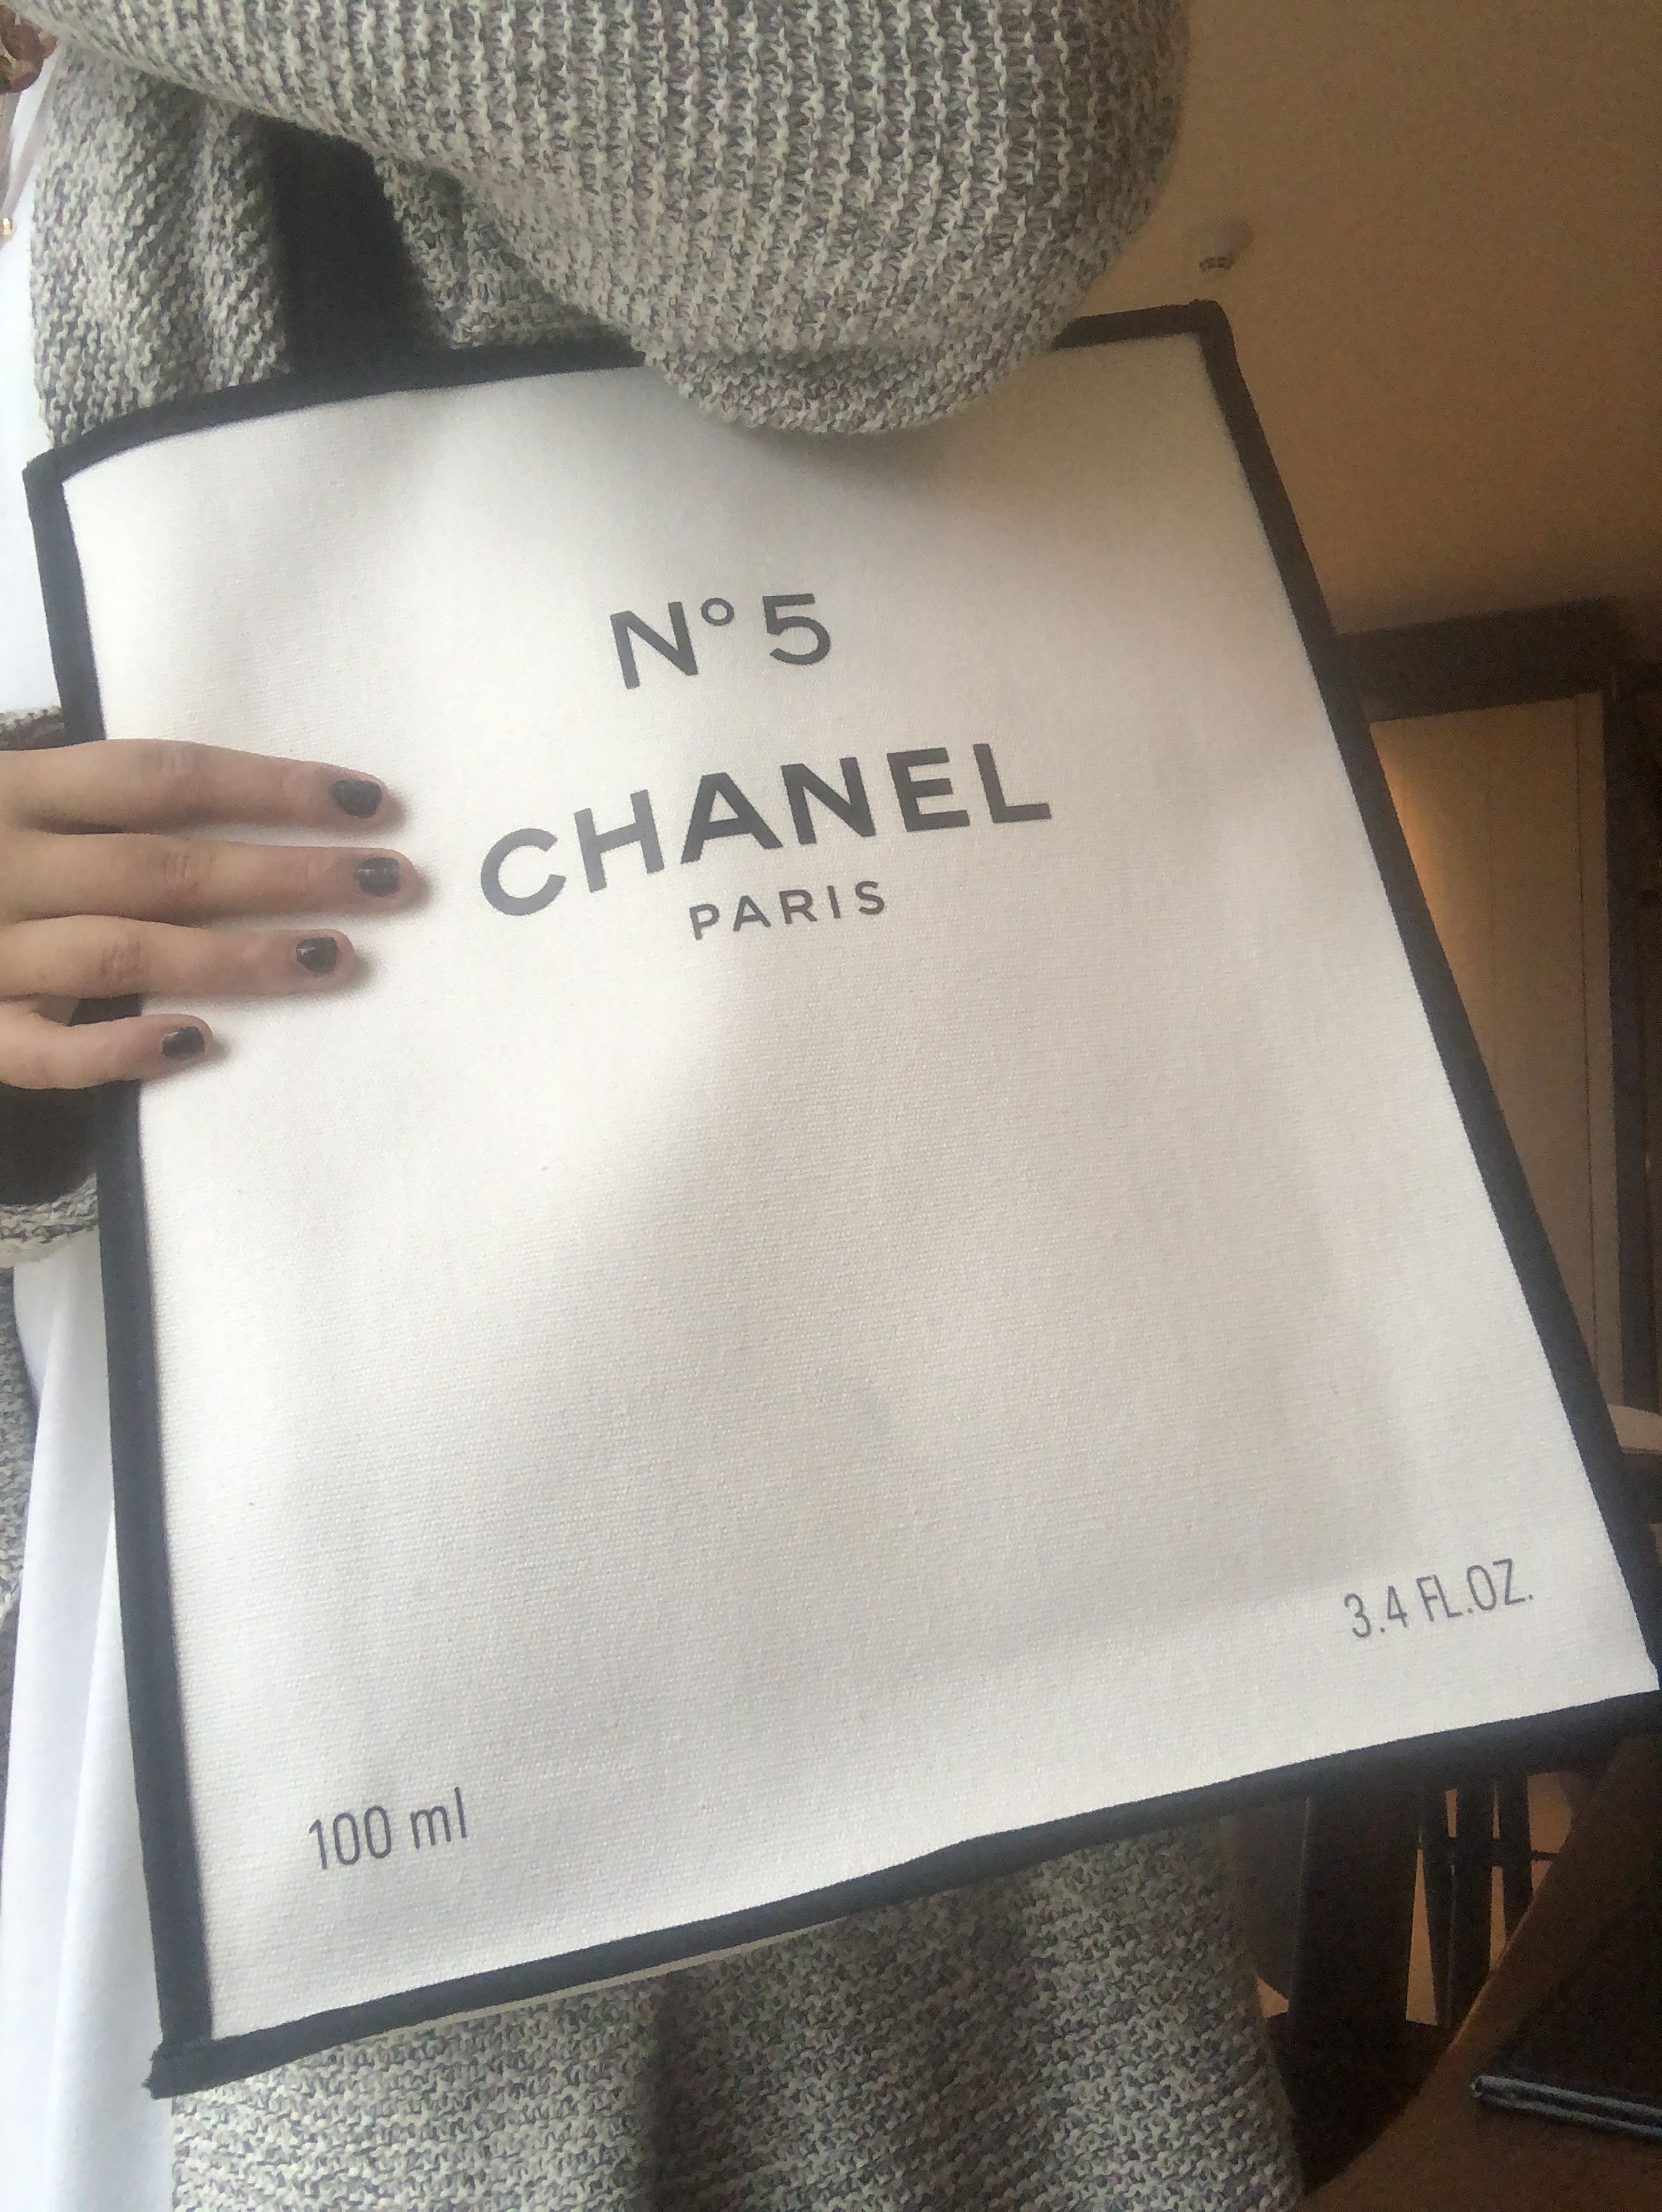 Buy CHANEL No. 5 VIP GIFT NEW White Tote Bag at Ubuy Nepal